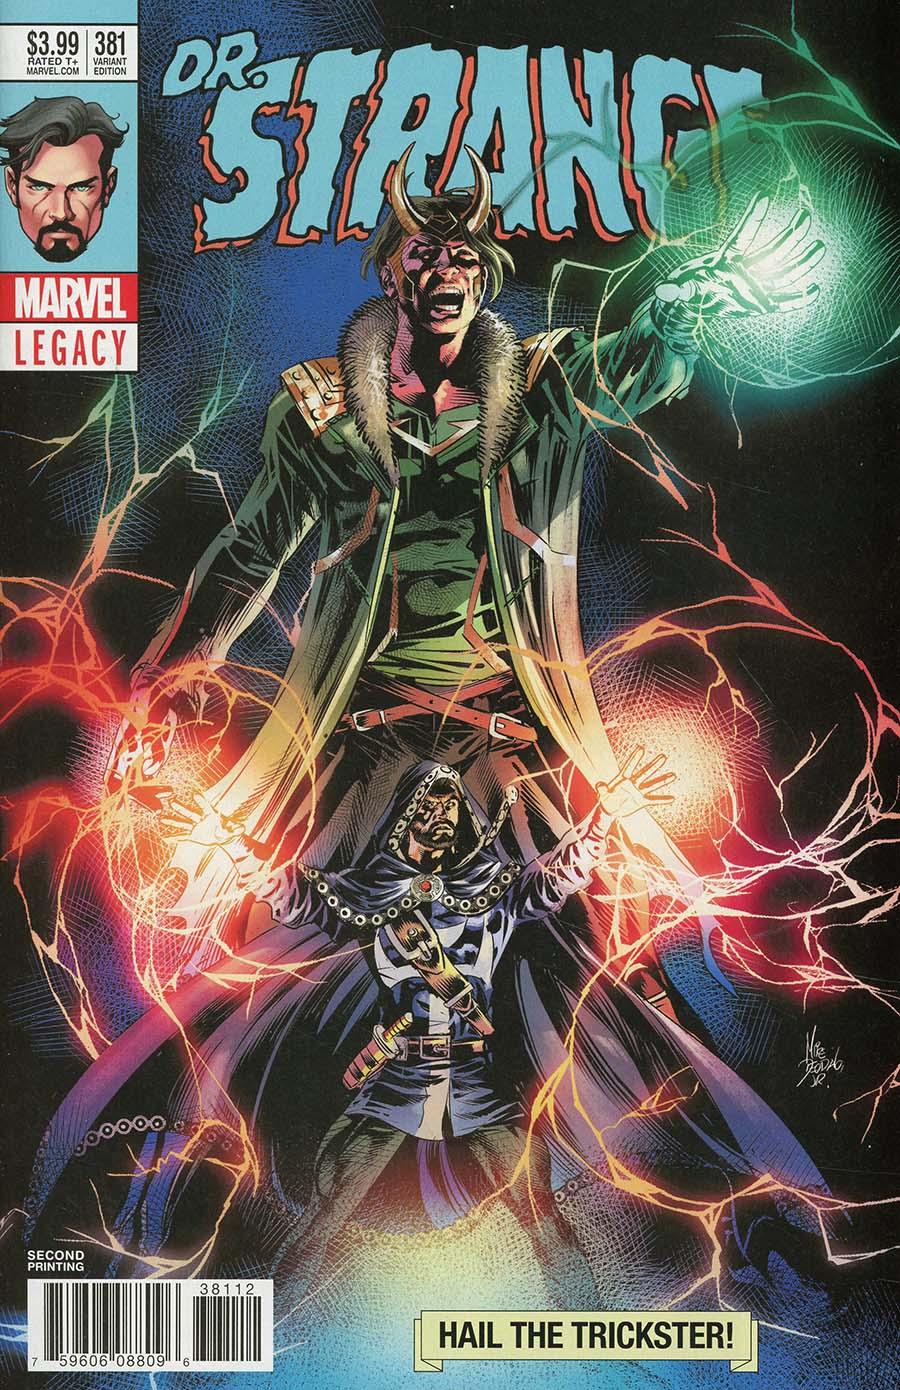 Doctor Strange Vol. 1 #381